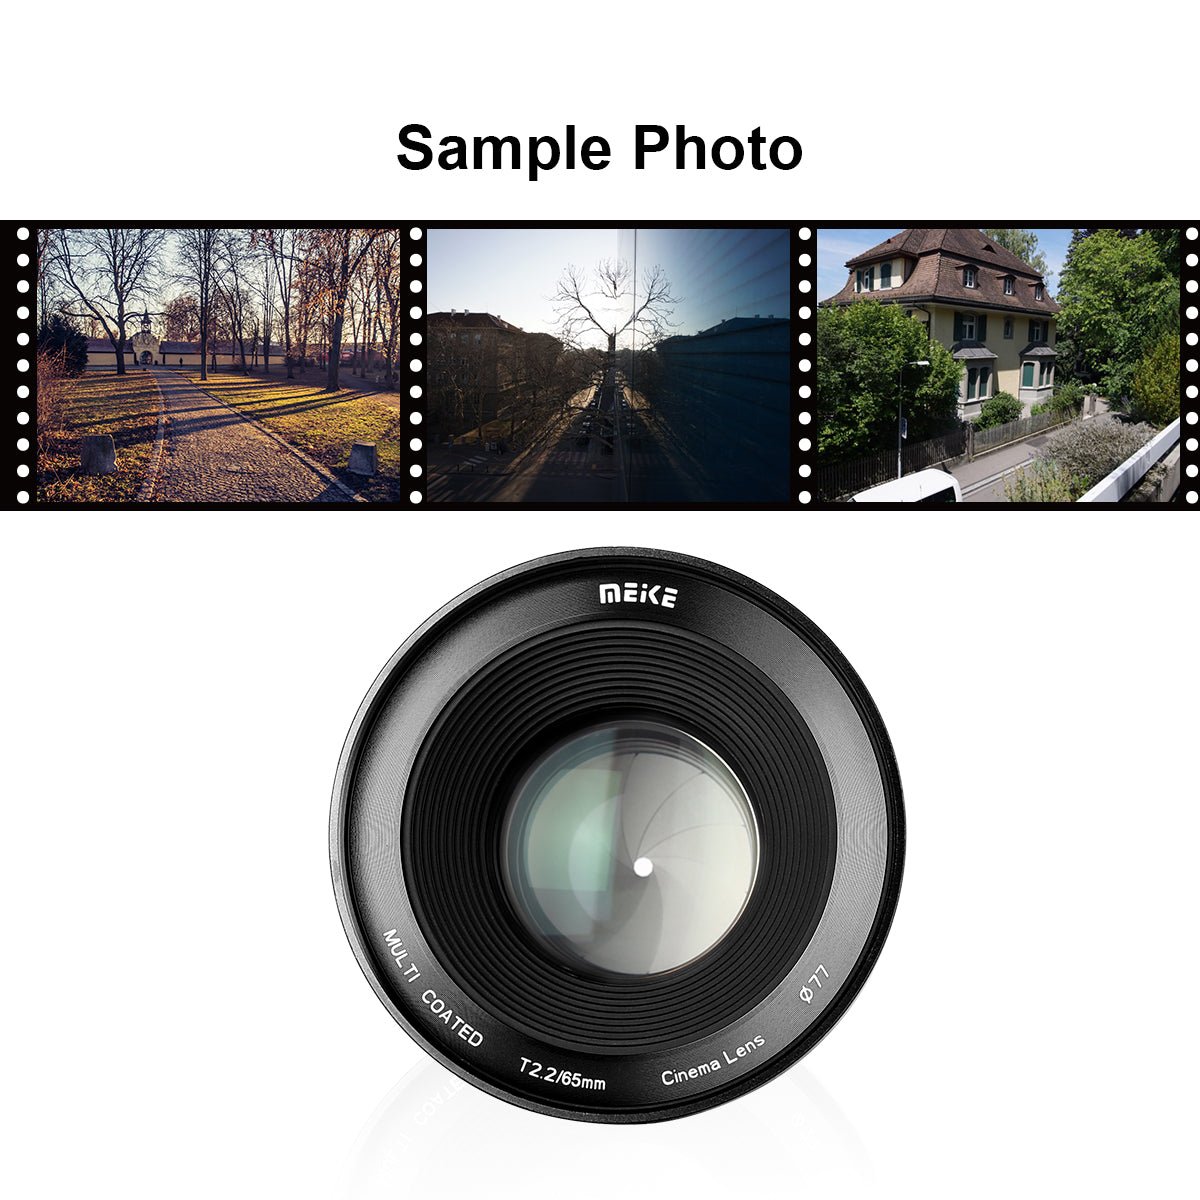 Meike Cinema Prime 65mm T2.2 Lens (Fujifilm X Mount) with Sample Shots